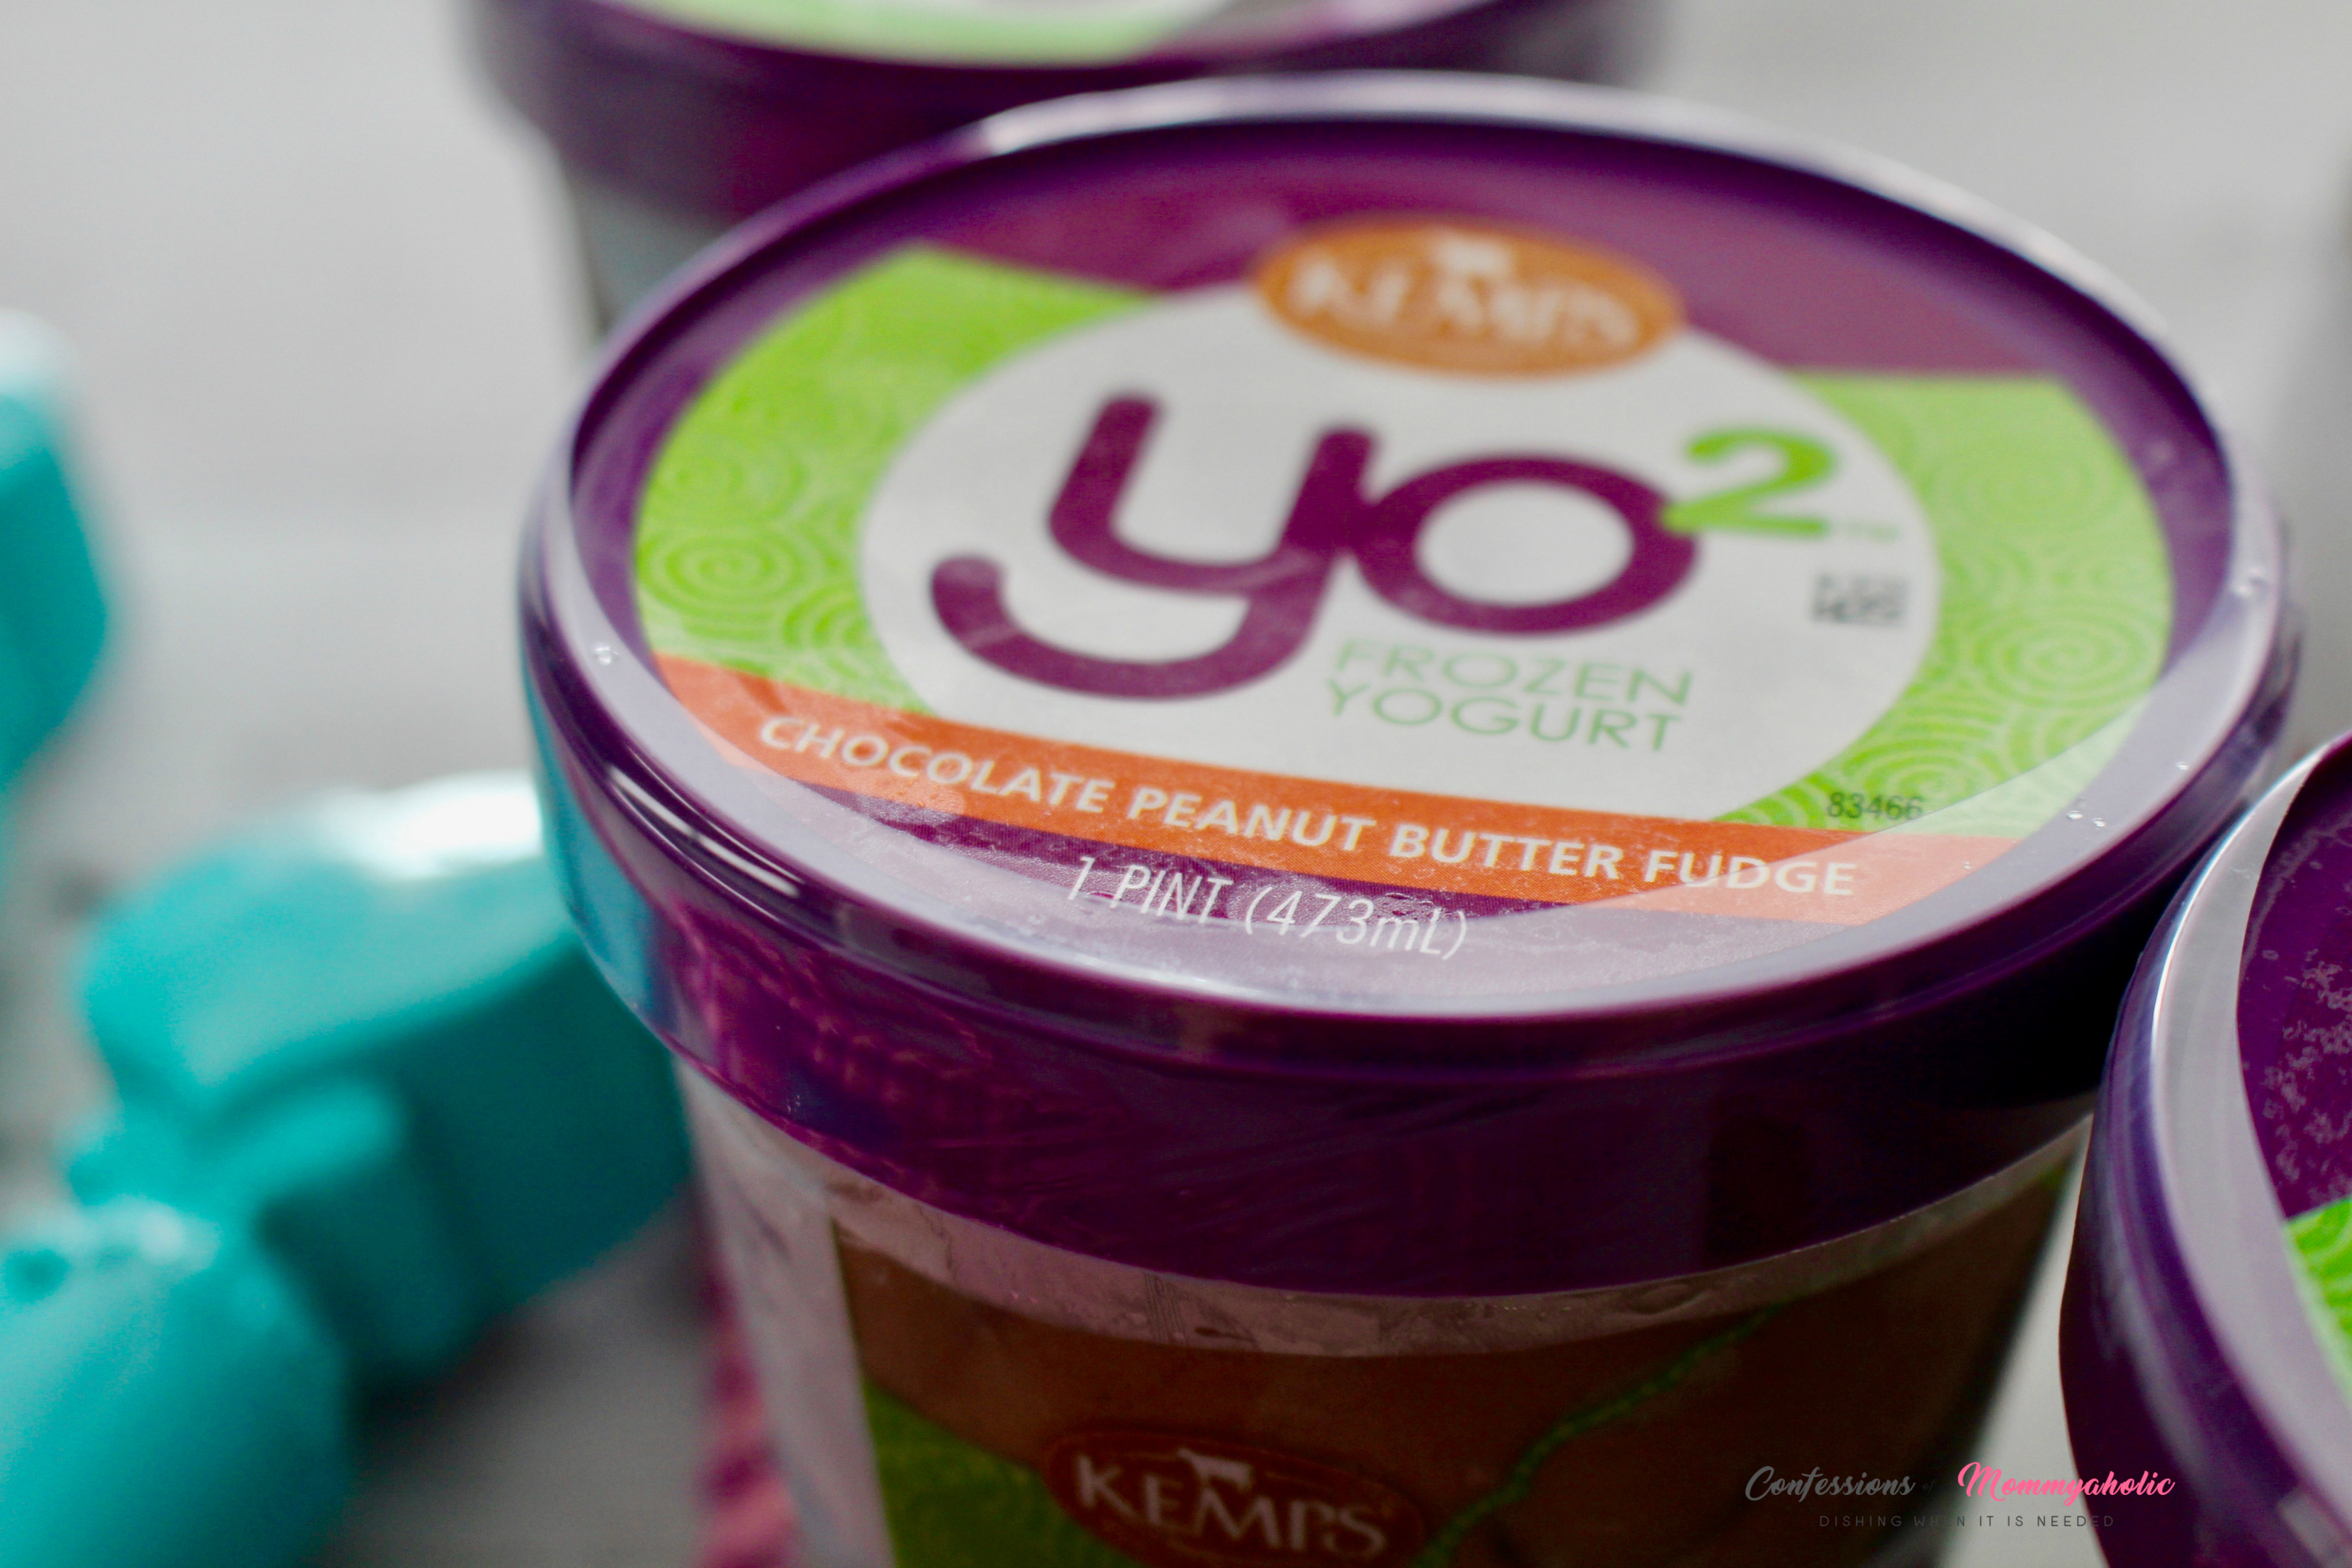 Kemps YO2 Chocolate Peanut Butter Fudge Frozen Yogurt